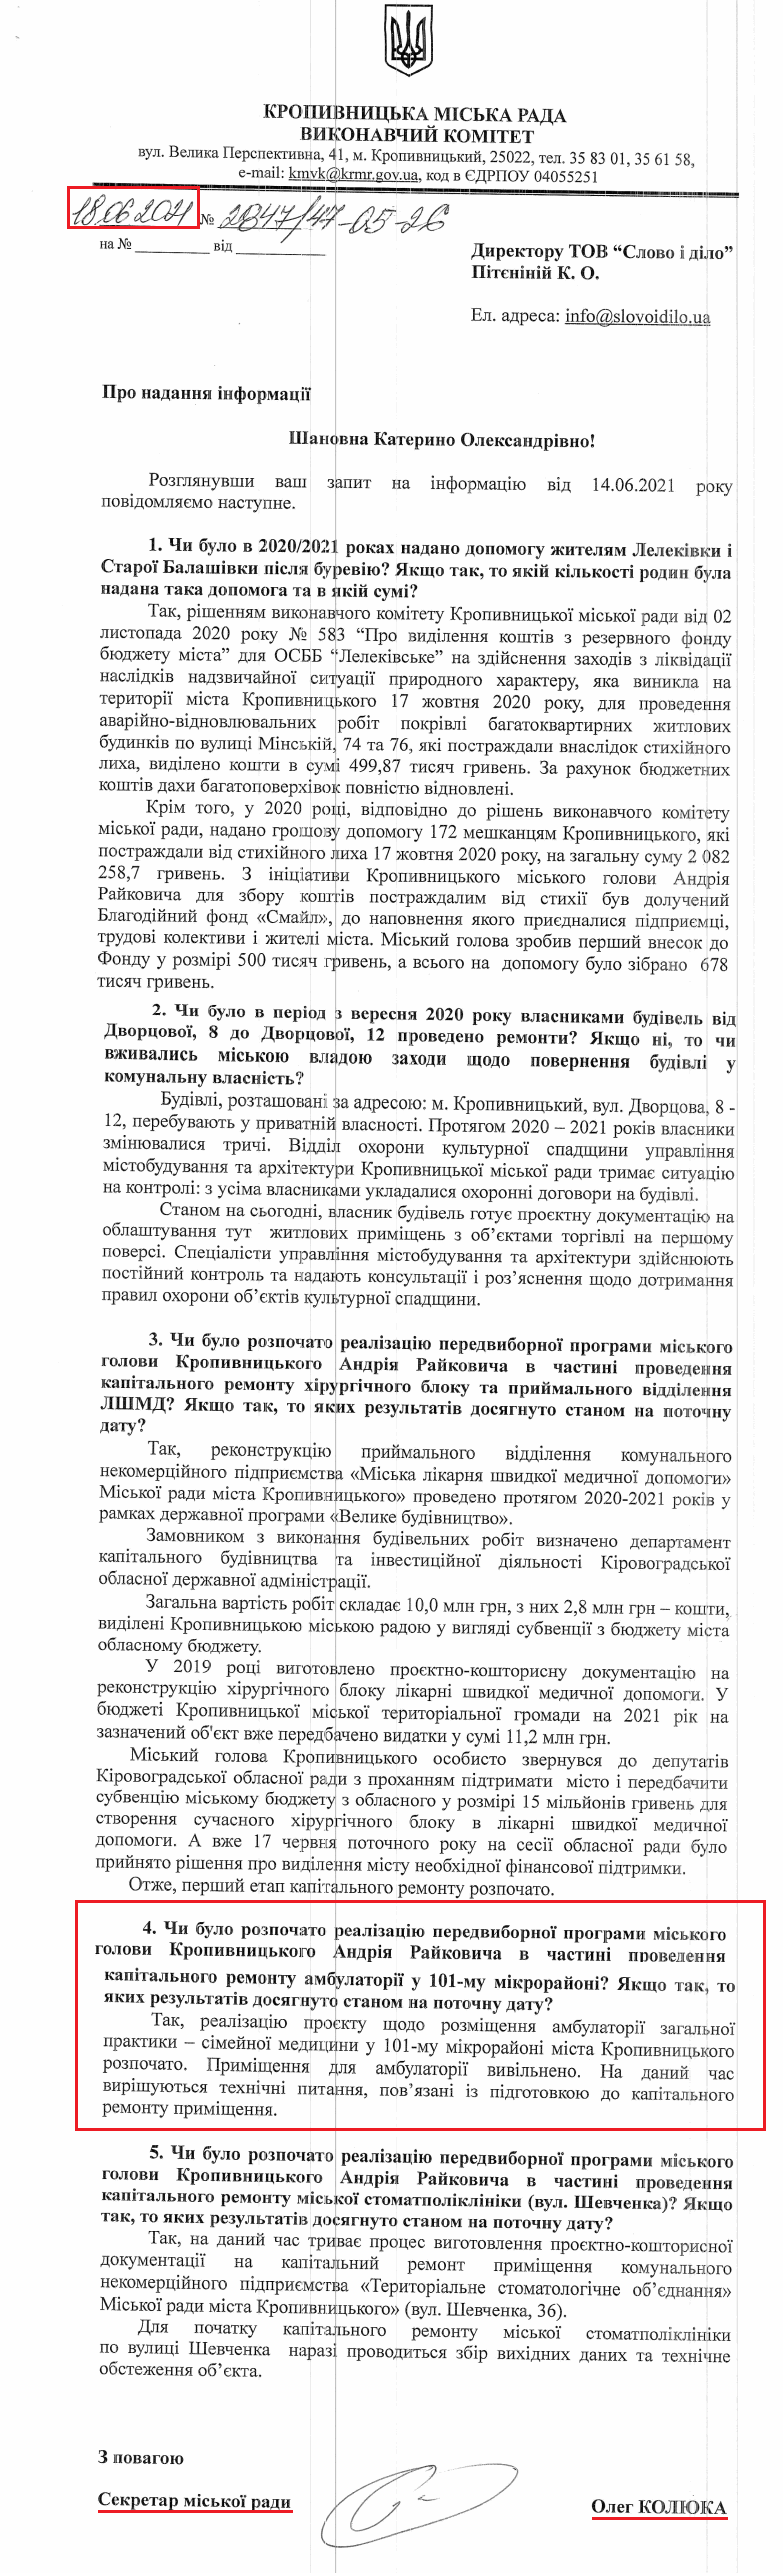 Лист секретаря міської ради Олега Колюка